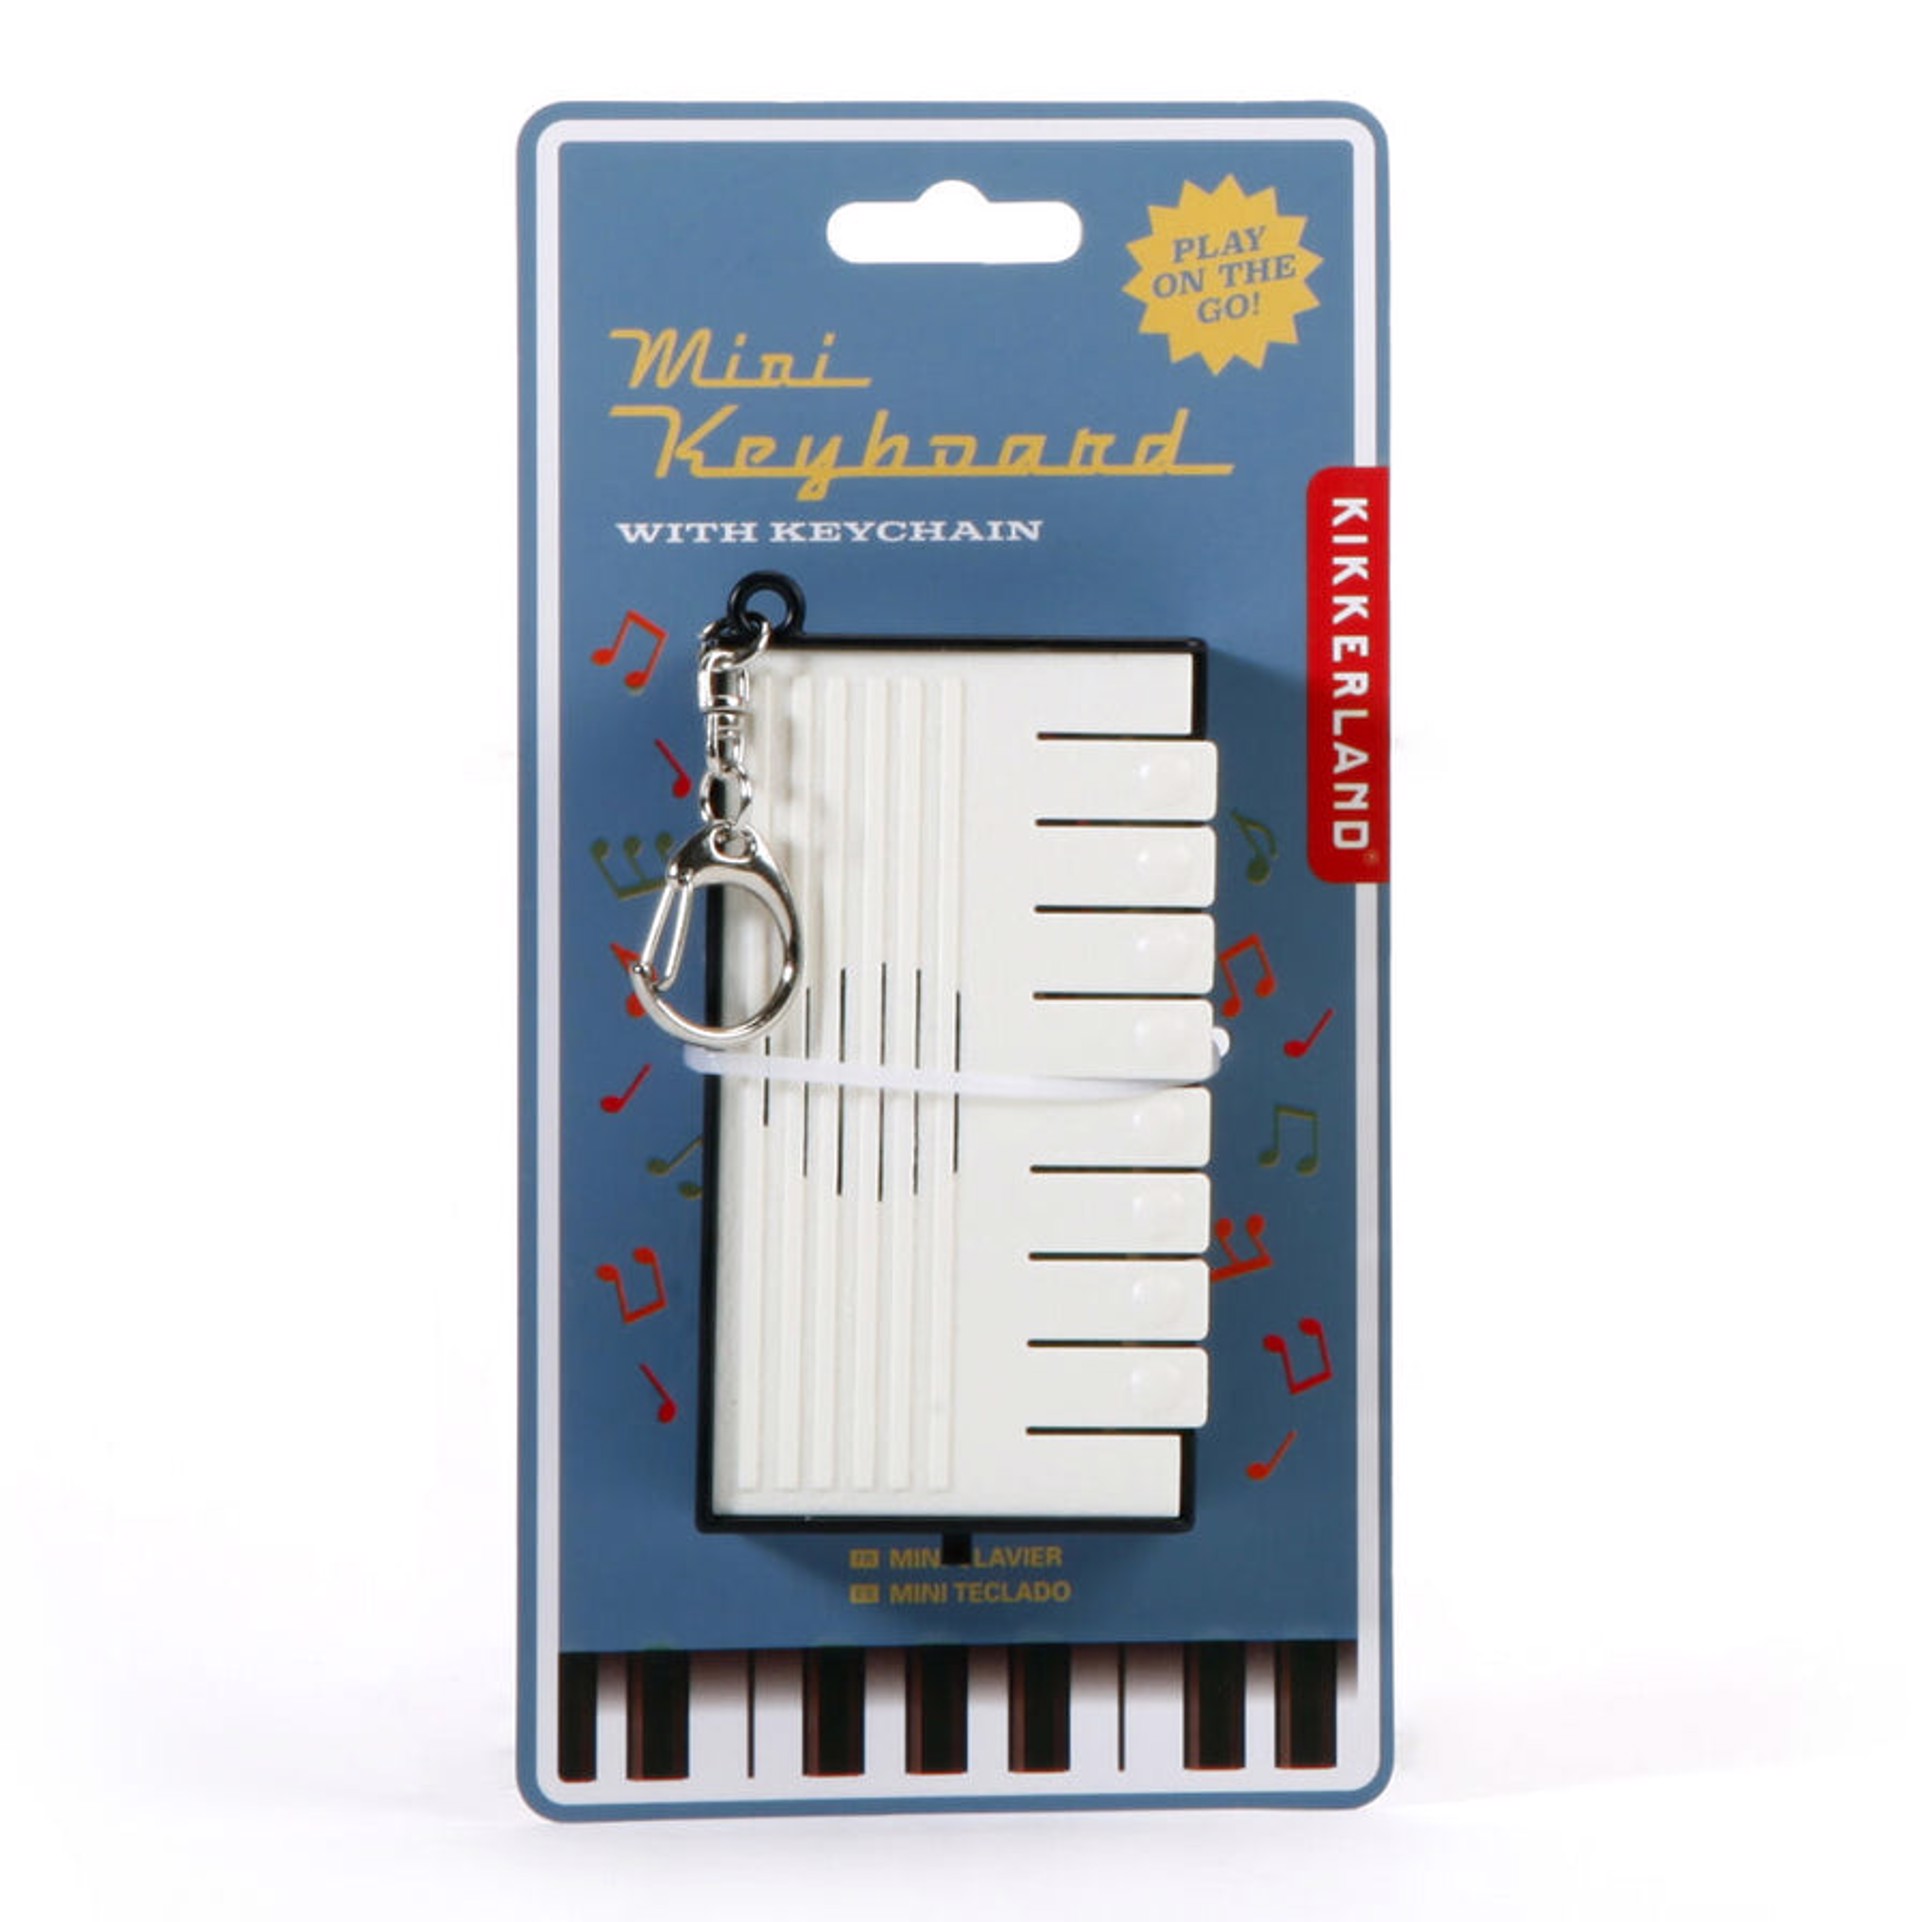 Mini Keyboard by Chauvet Arts